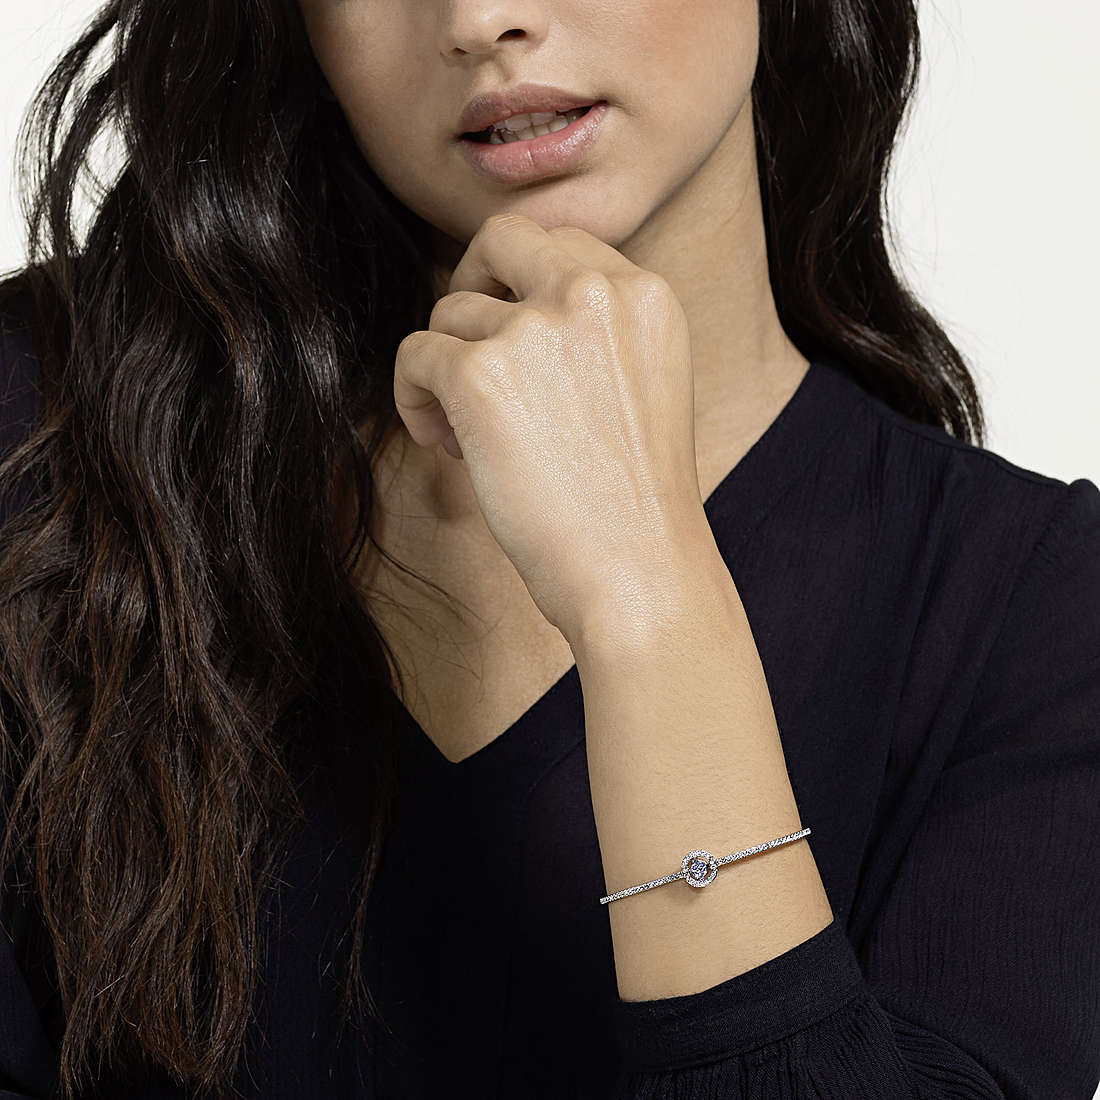 Swarovski bracelets Sparkling woman 5561881 wearing